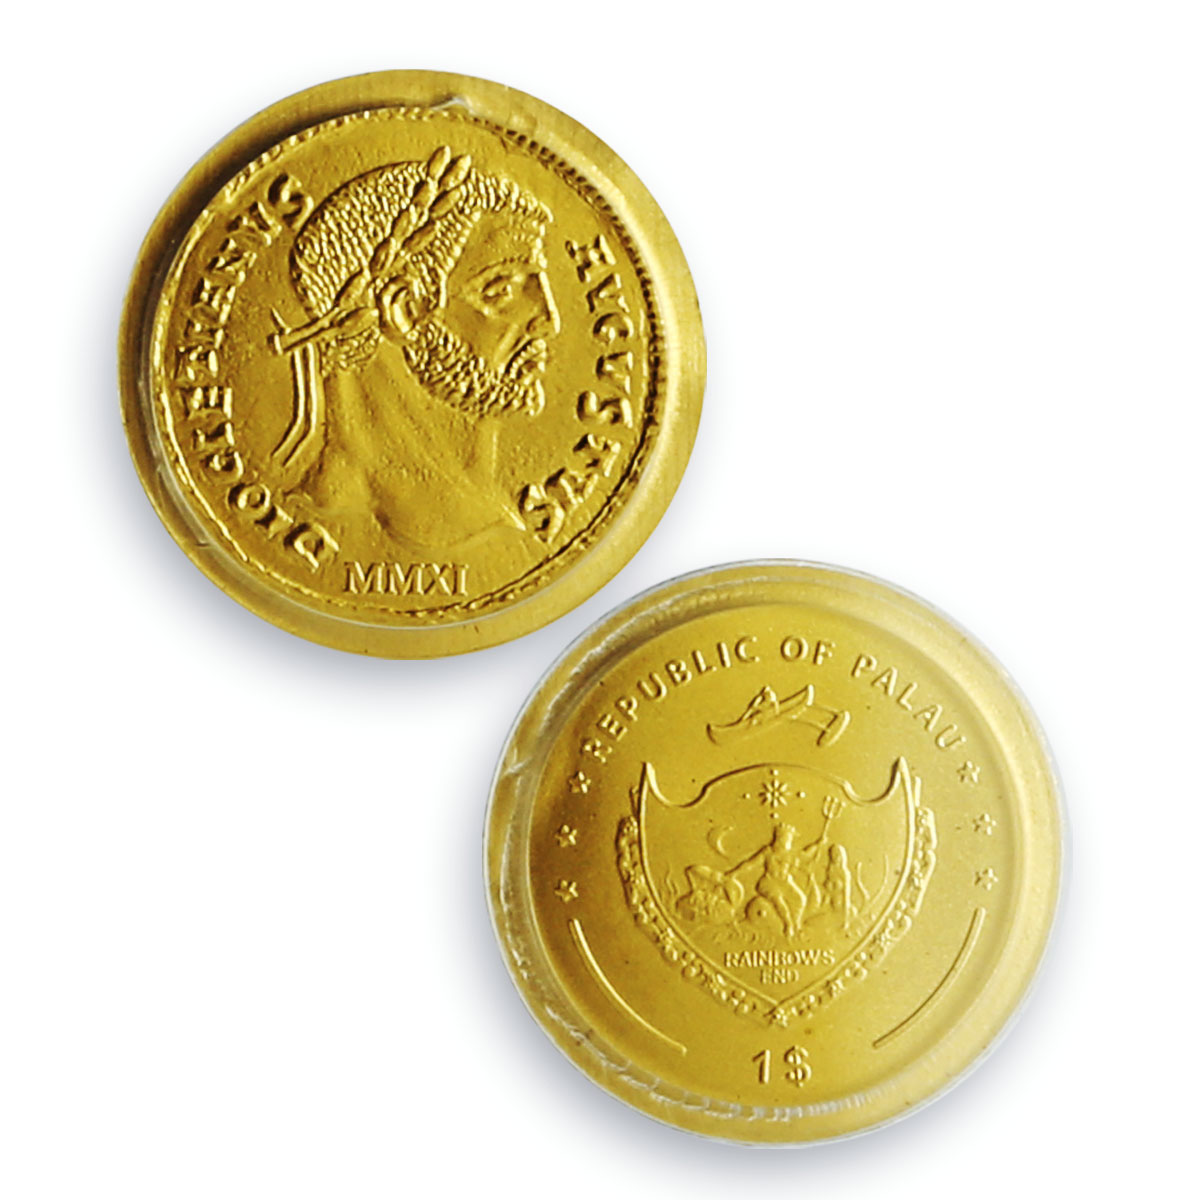 Palau 1 dollar Rome Empire Emperor Diocletian Politics MS70 PCGS gold coin 2011